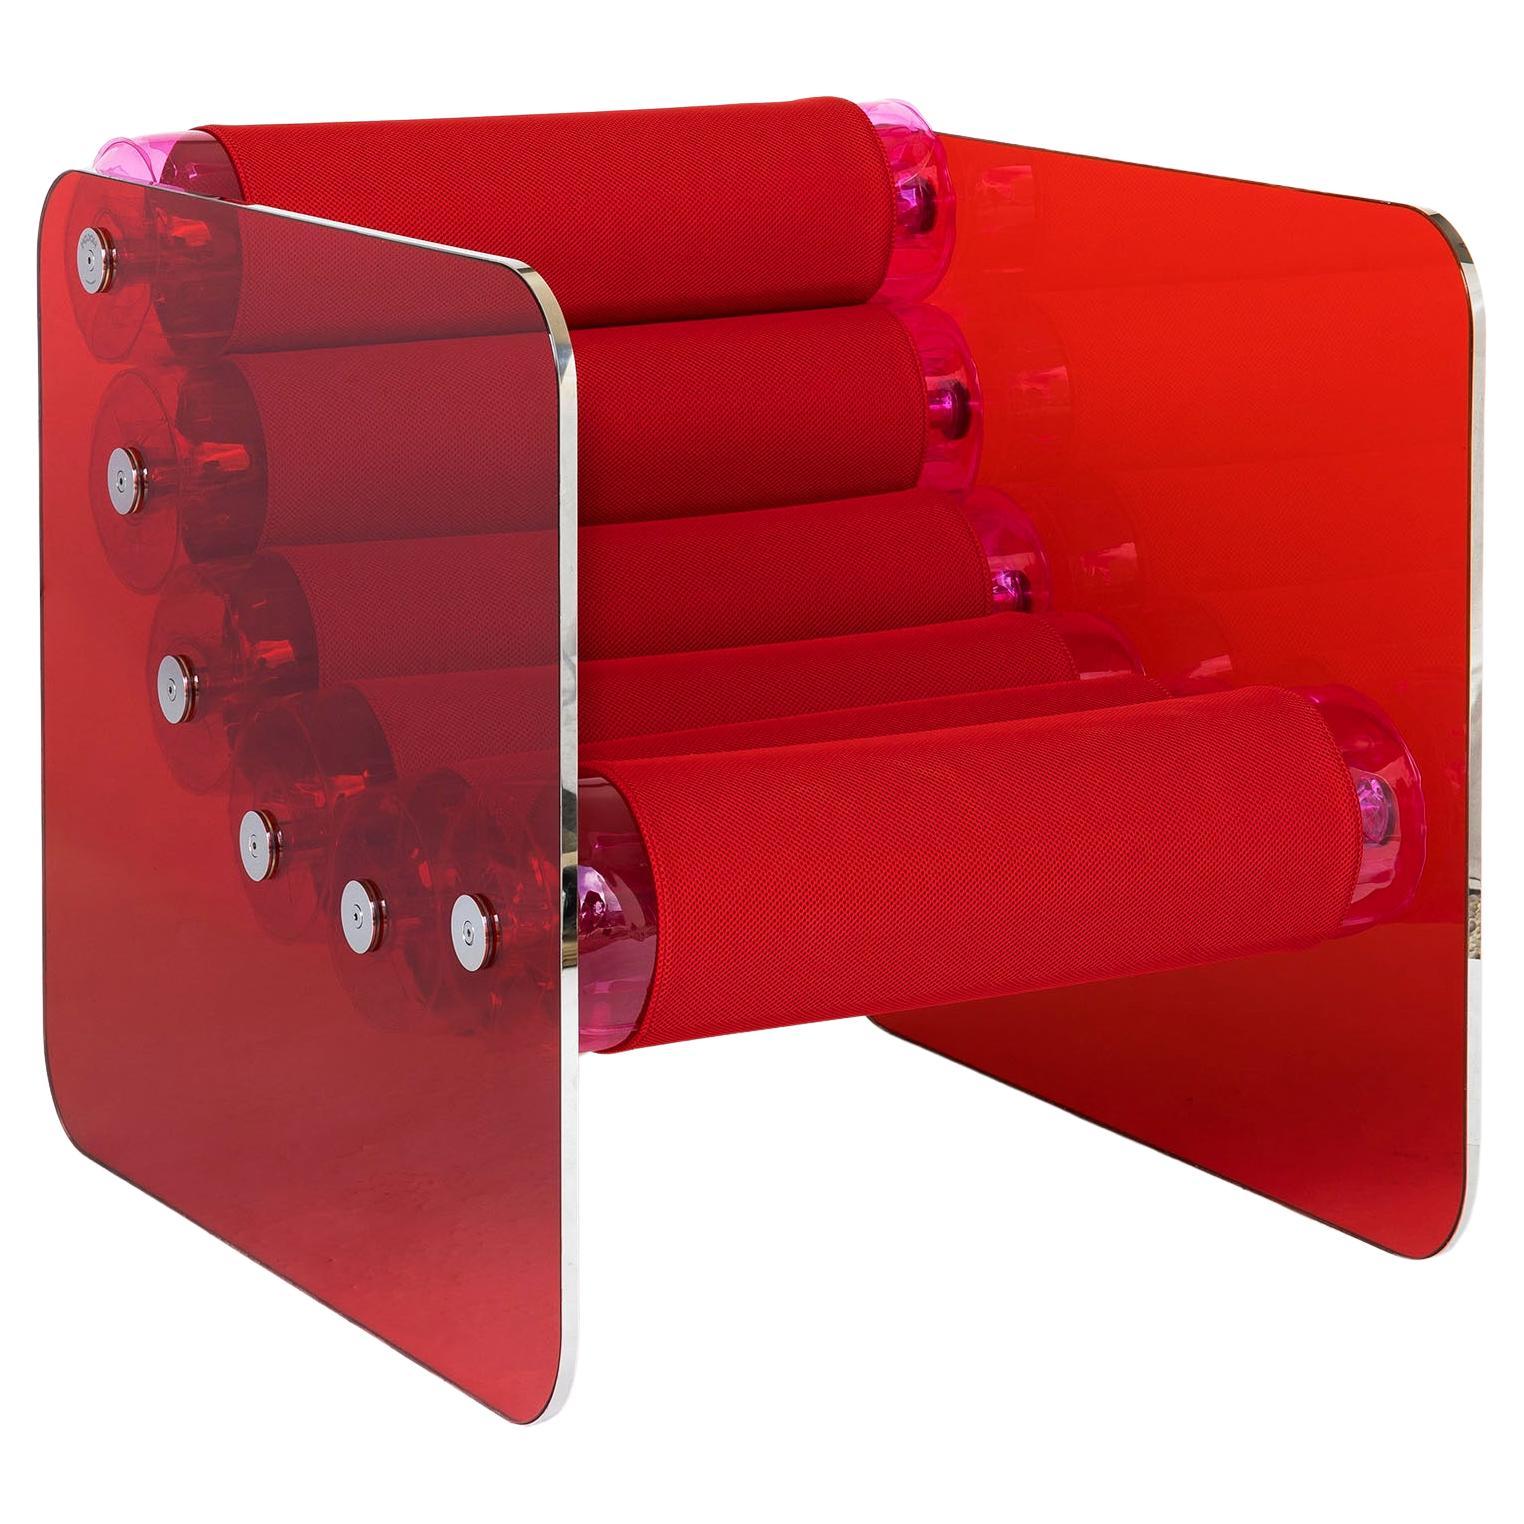 Mw02 design armchair, handmade in France by designer Olivier Santini For Sale